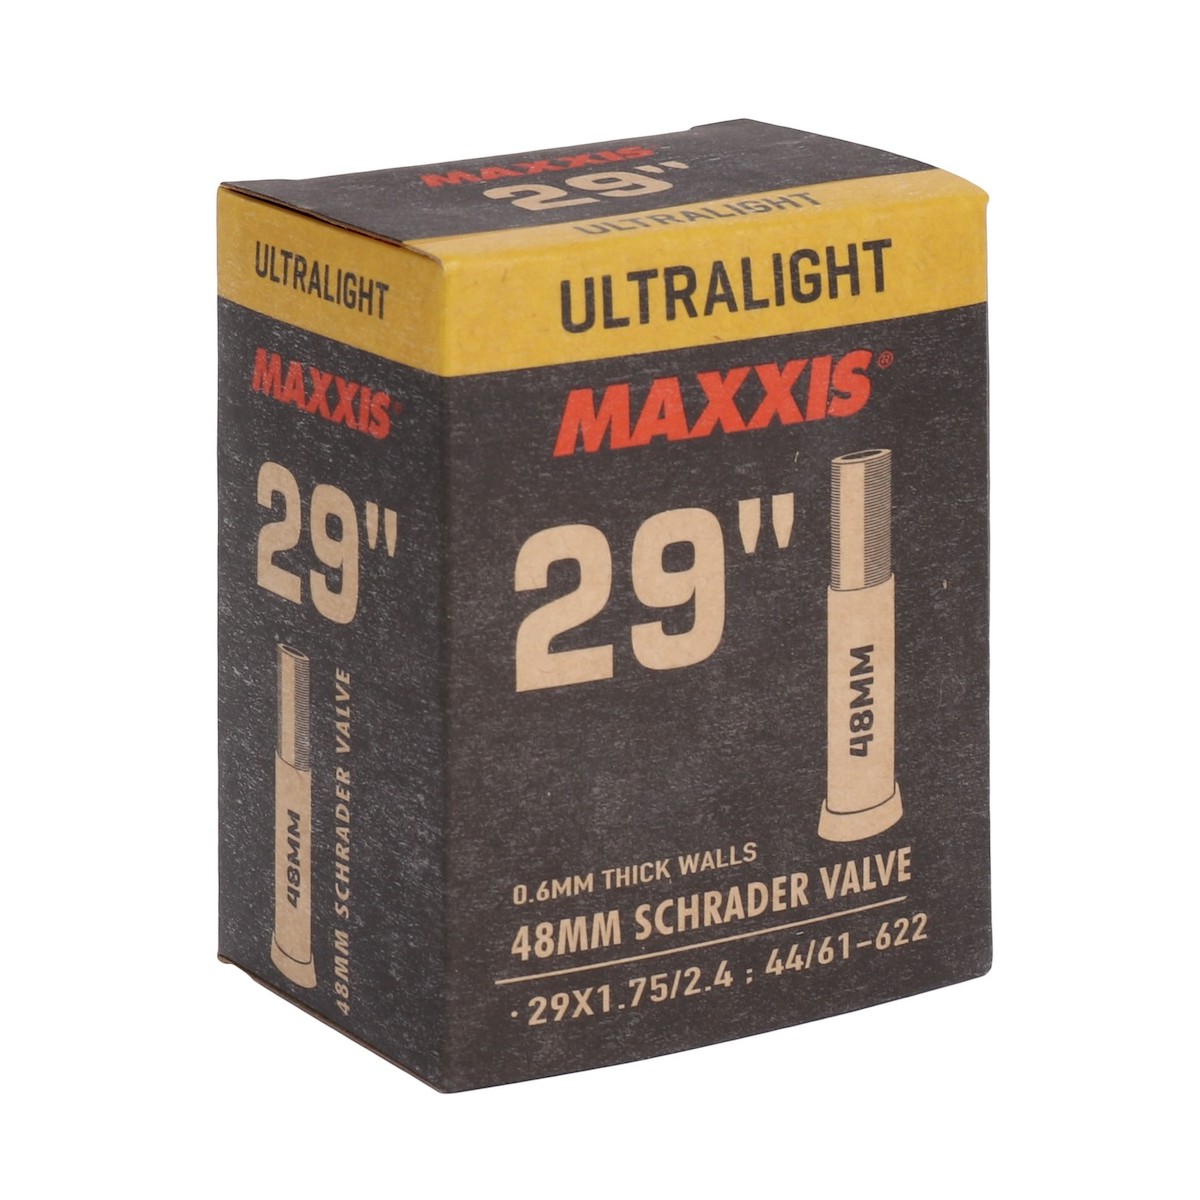 MAXXIS ULTRALIGHT 29 x 1.75/2.40 SCHRADER